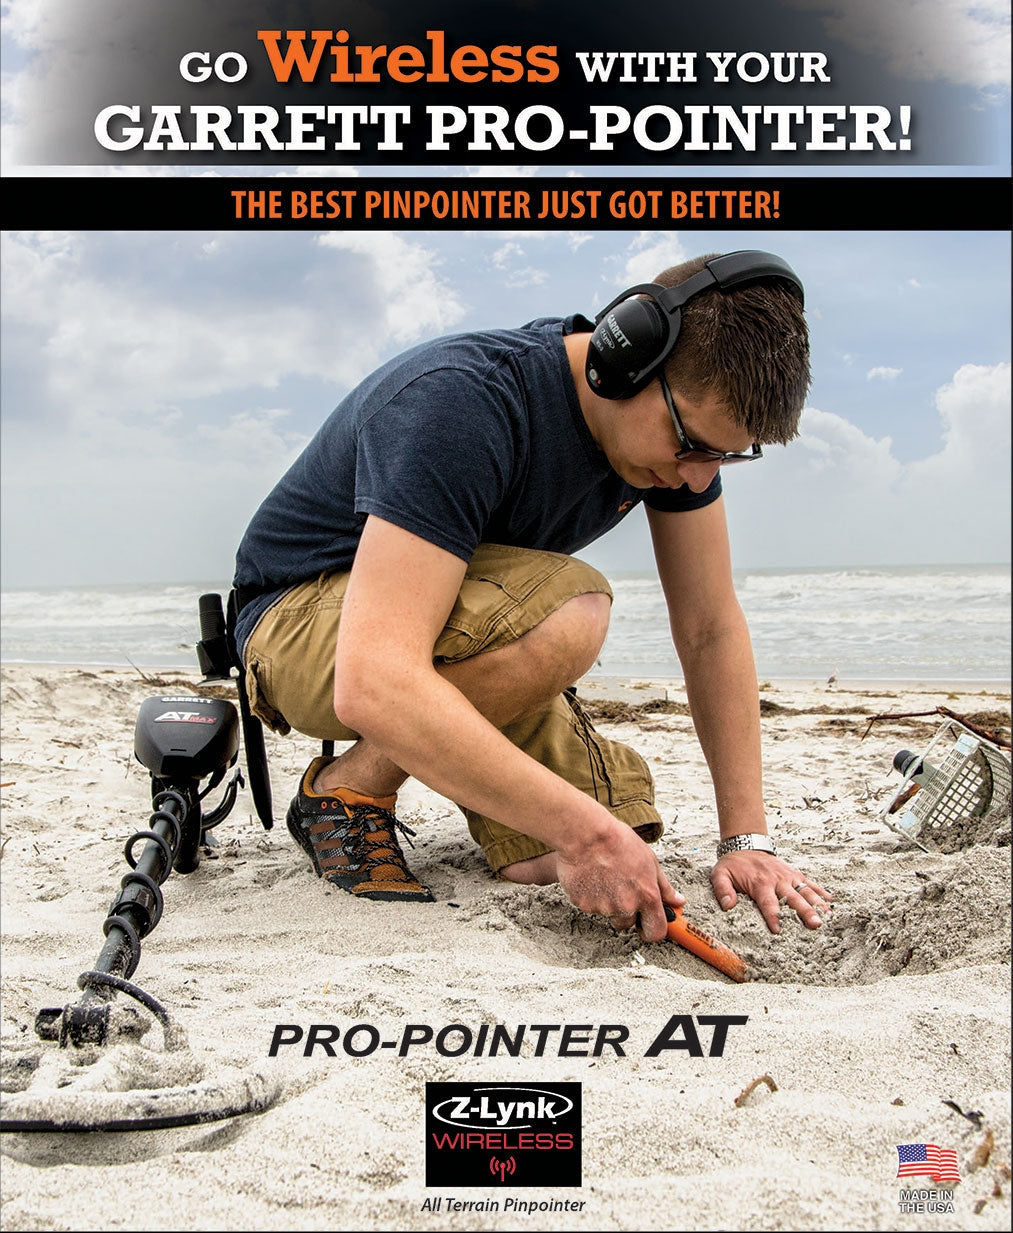 Garrett Pro-Pointer® AT Waterproof Z-Lynk Wireless Pinpointing